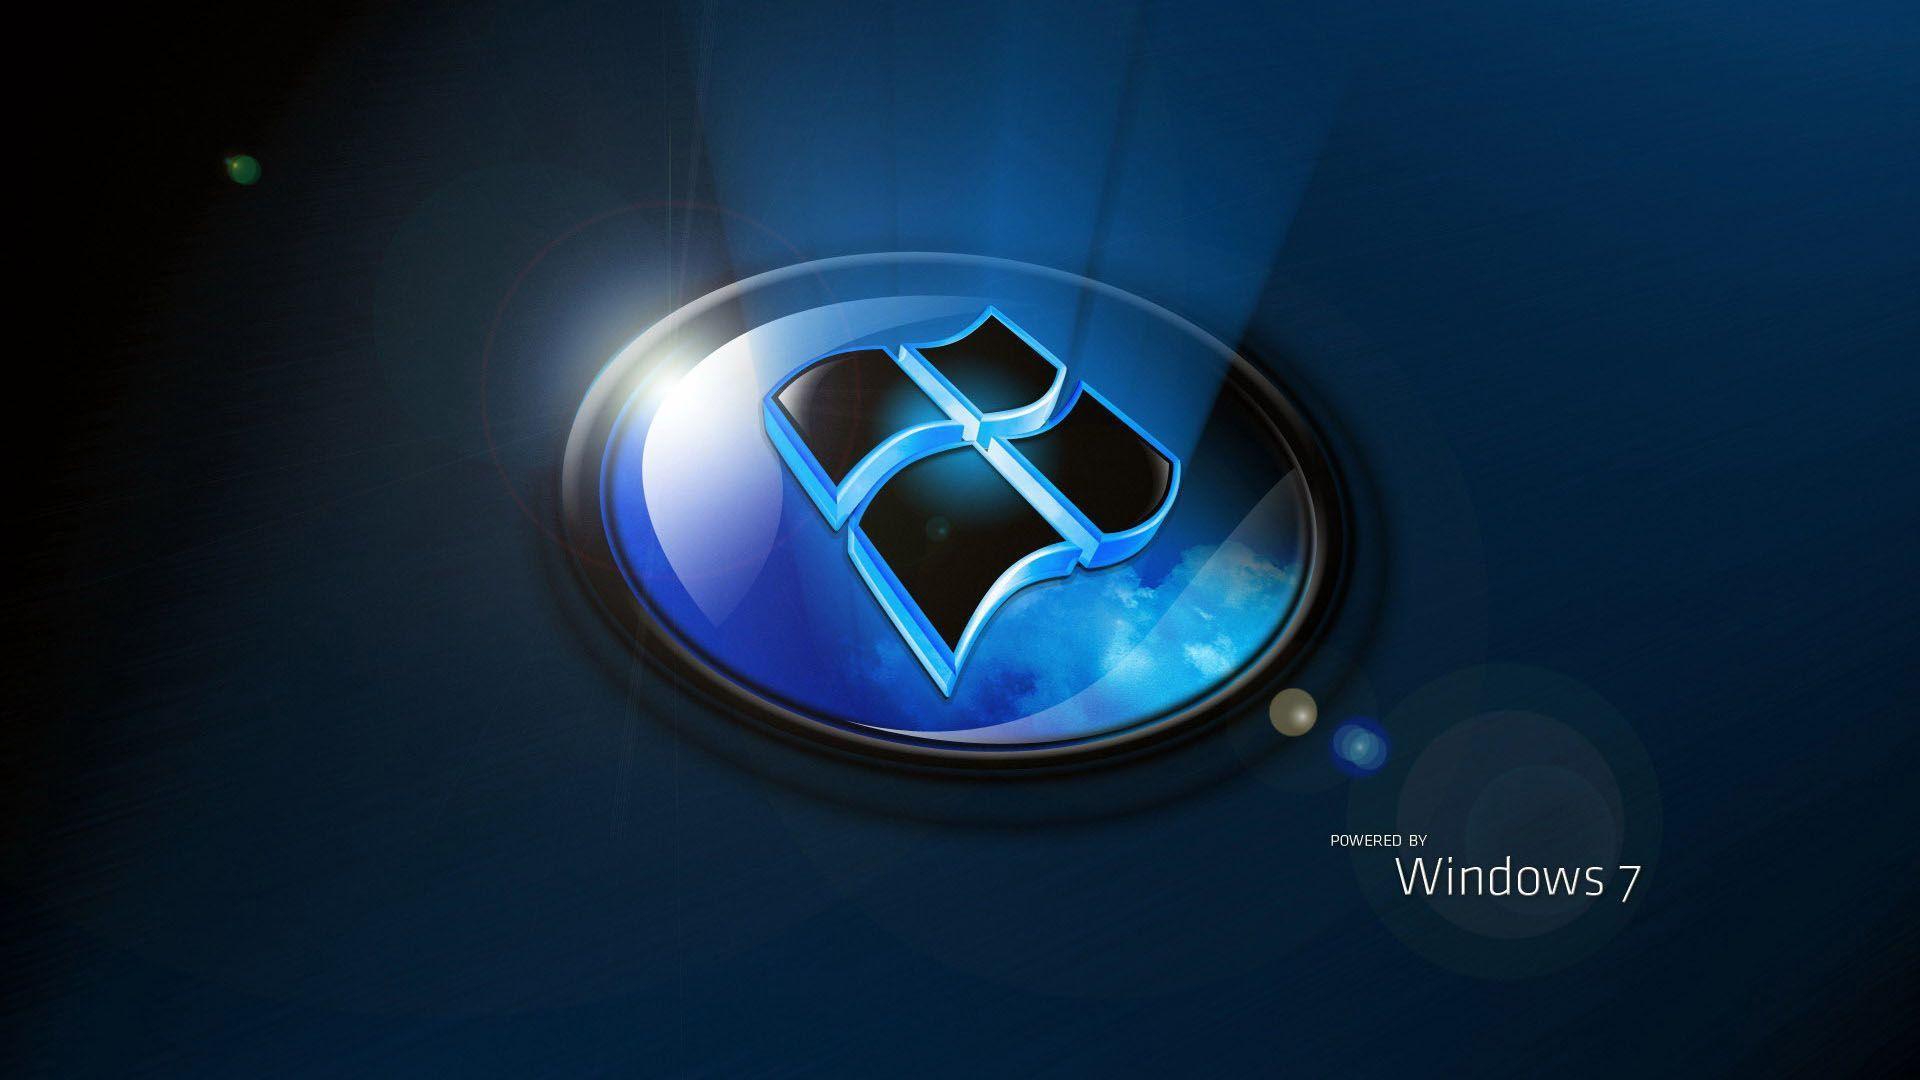 Windows 7 home premium 3D latest logo wallpaper free HD